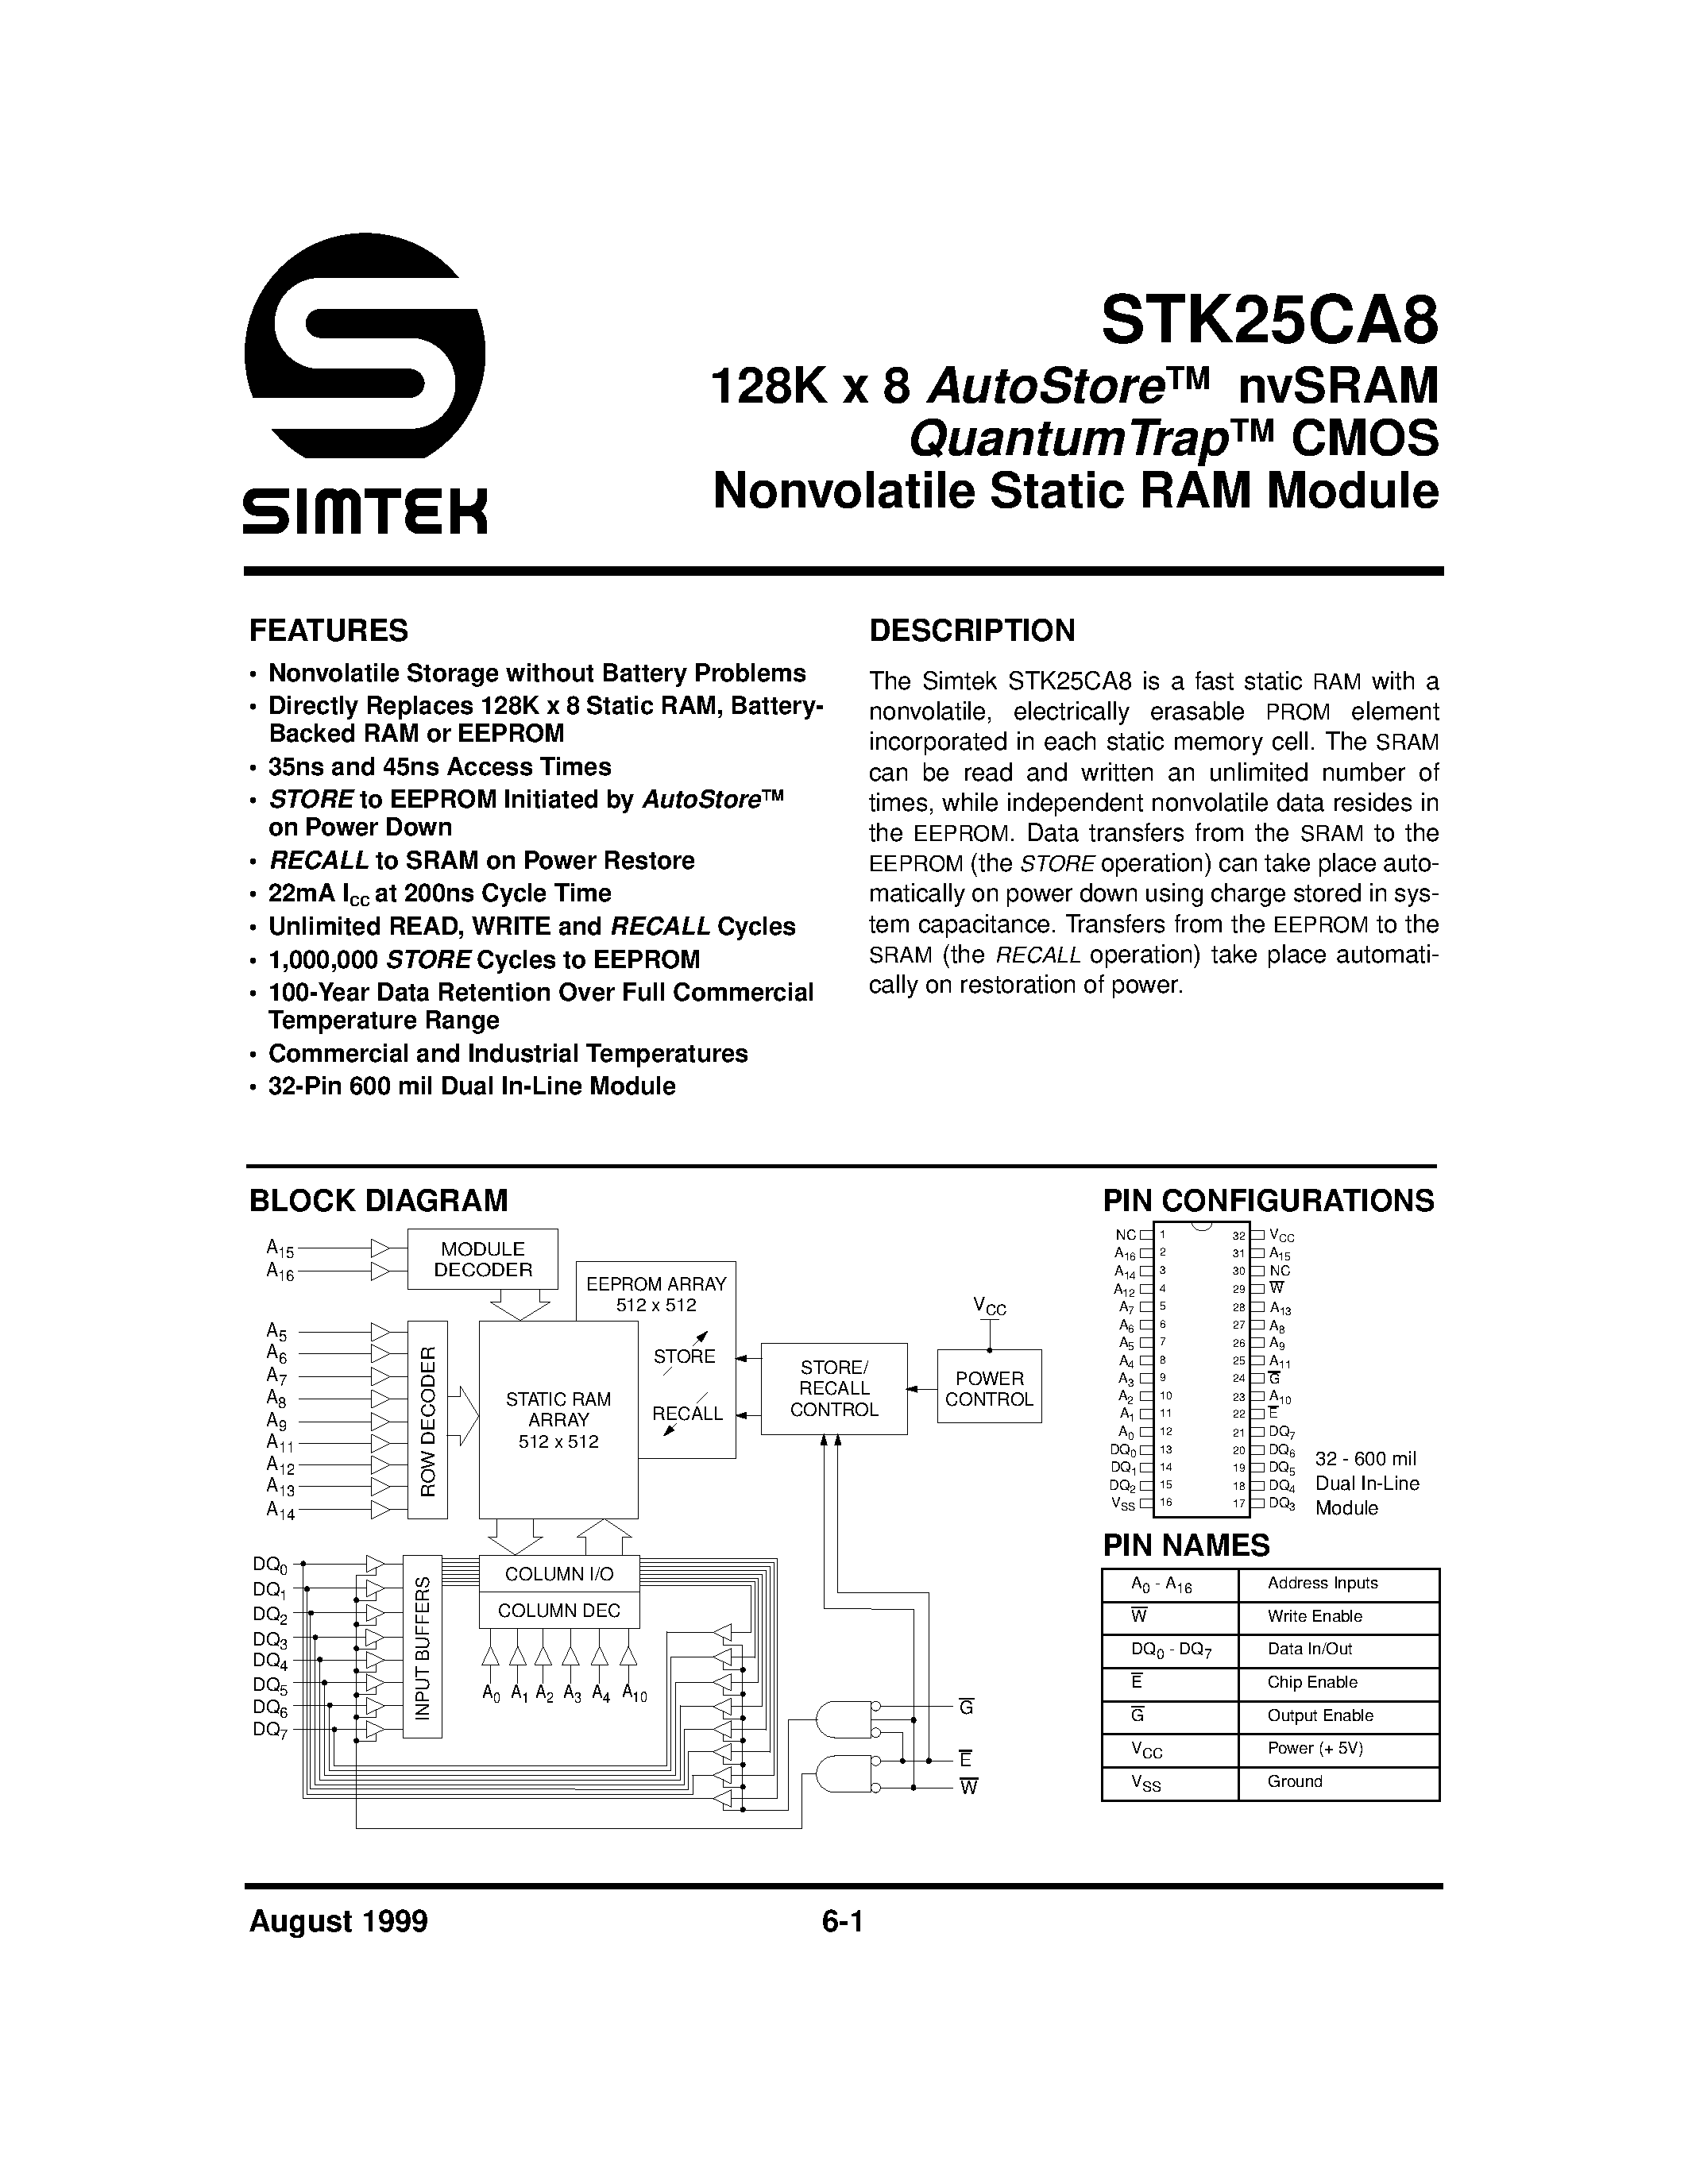 Datasheet STK25CA8 - 128K x 8 AutoStore nvSRAM CMOS Nonvolatile Static RAM Module page 1